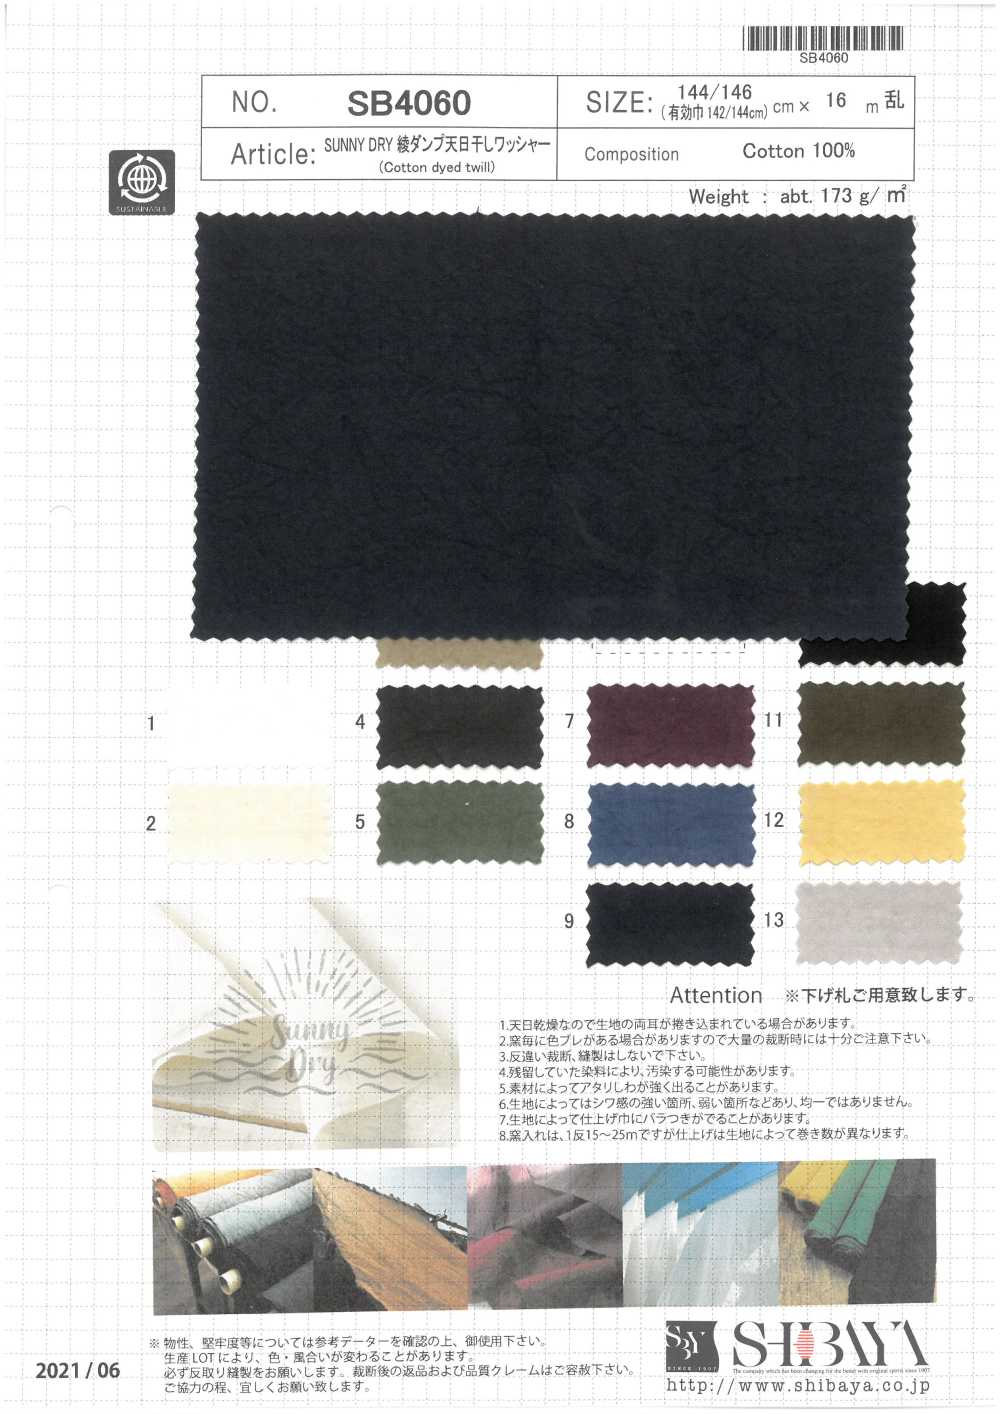 SB4060 SUNNY DRY Twill Weave Dump Sun-dried Washer Processing[Textile / Fabric] SHIBAYA